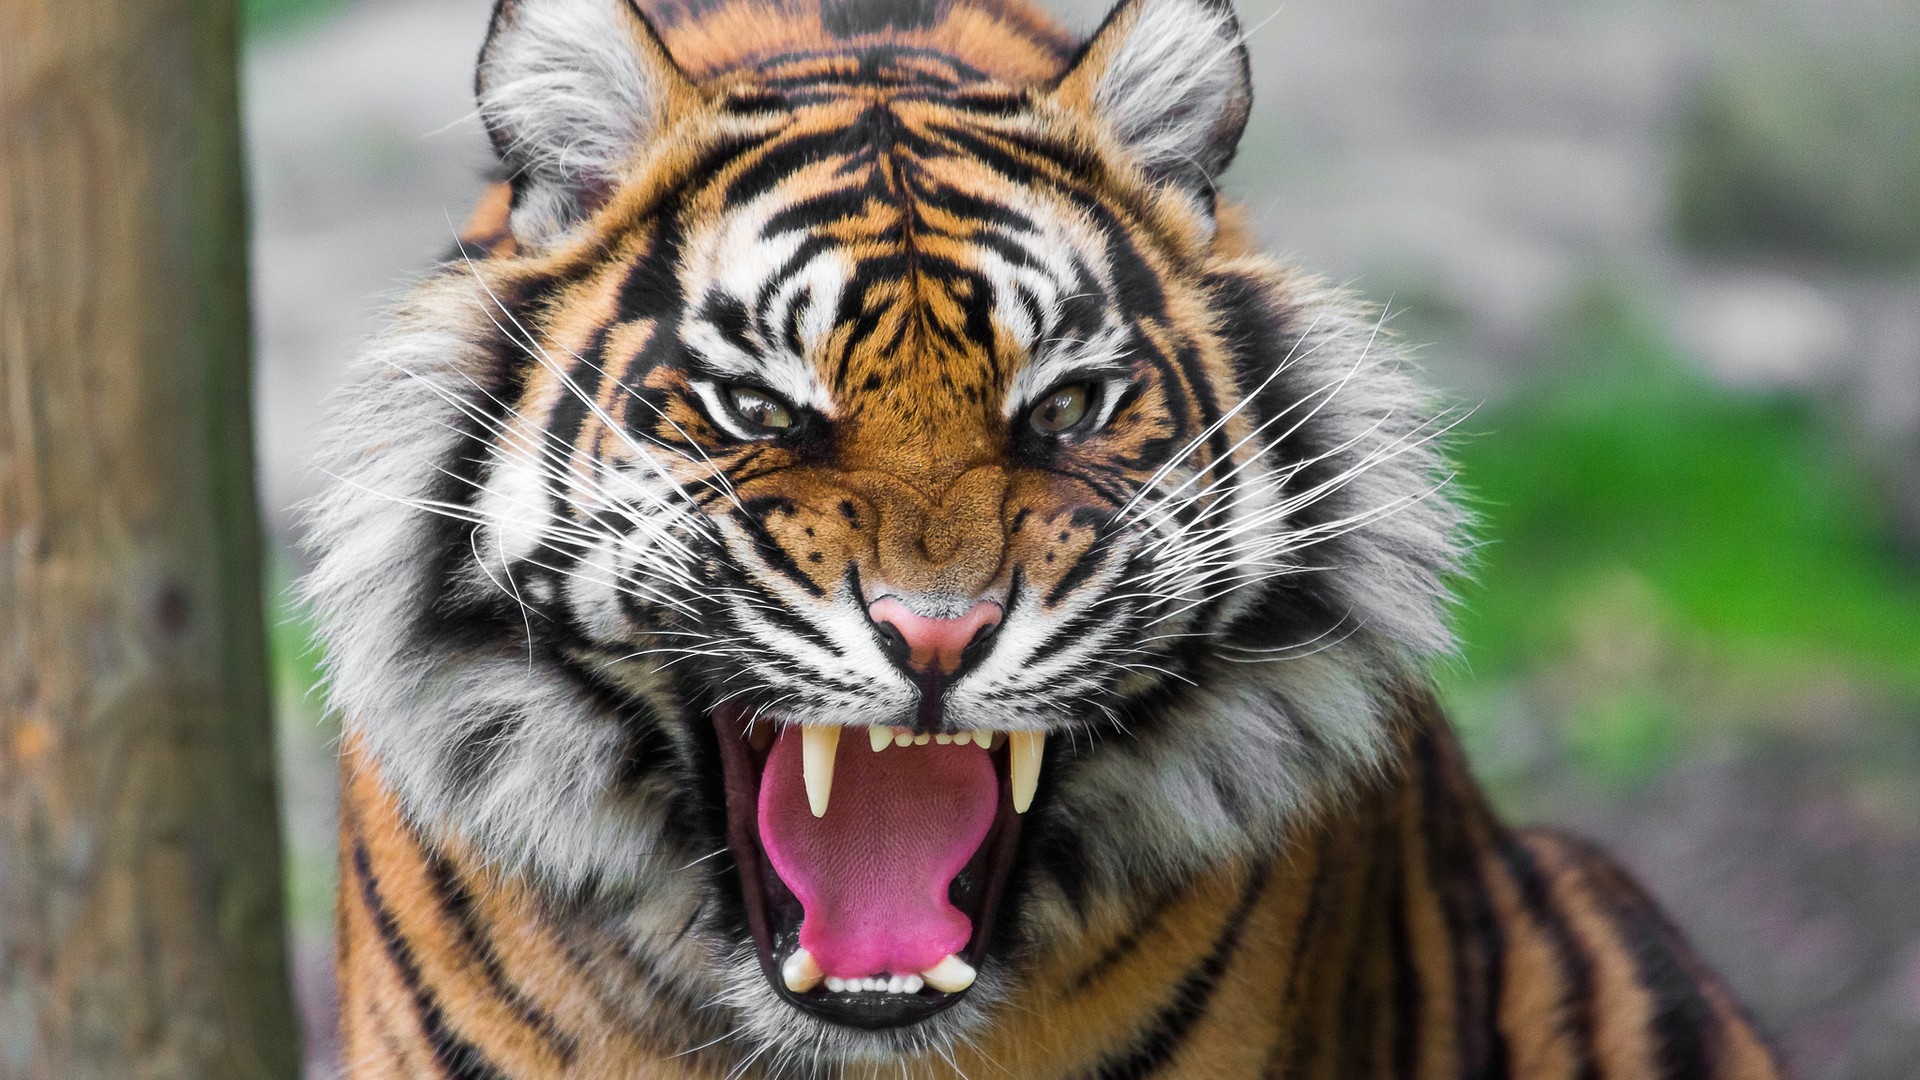  Tiger Face Teeth Anger Big cat Wallpaper Background Full HD 1080p 1920x1080